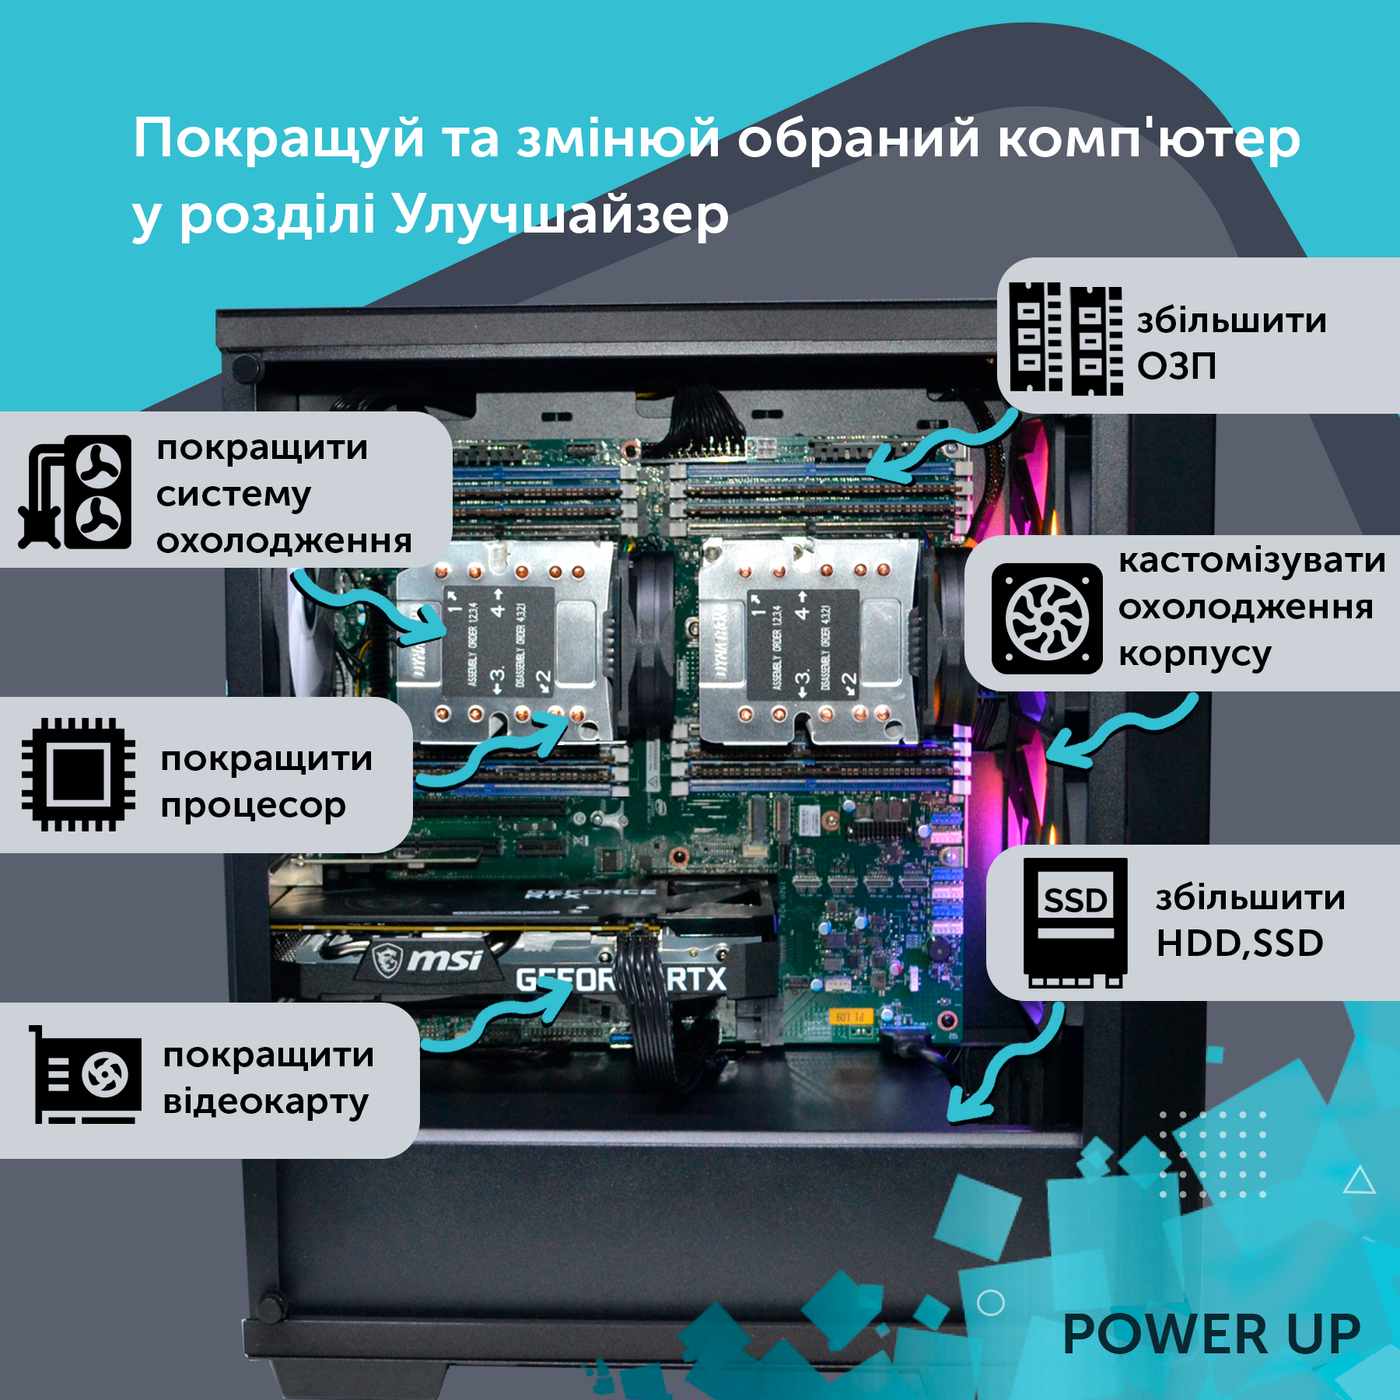 Рабочая станция PowerUp Desktop #286 Ryzen 9 7900x/64 GB/SSD 1TB/GeForce RTX 4060Ti 16GB